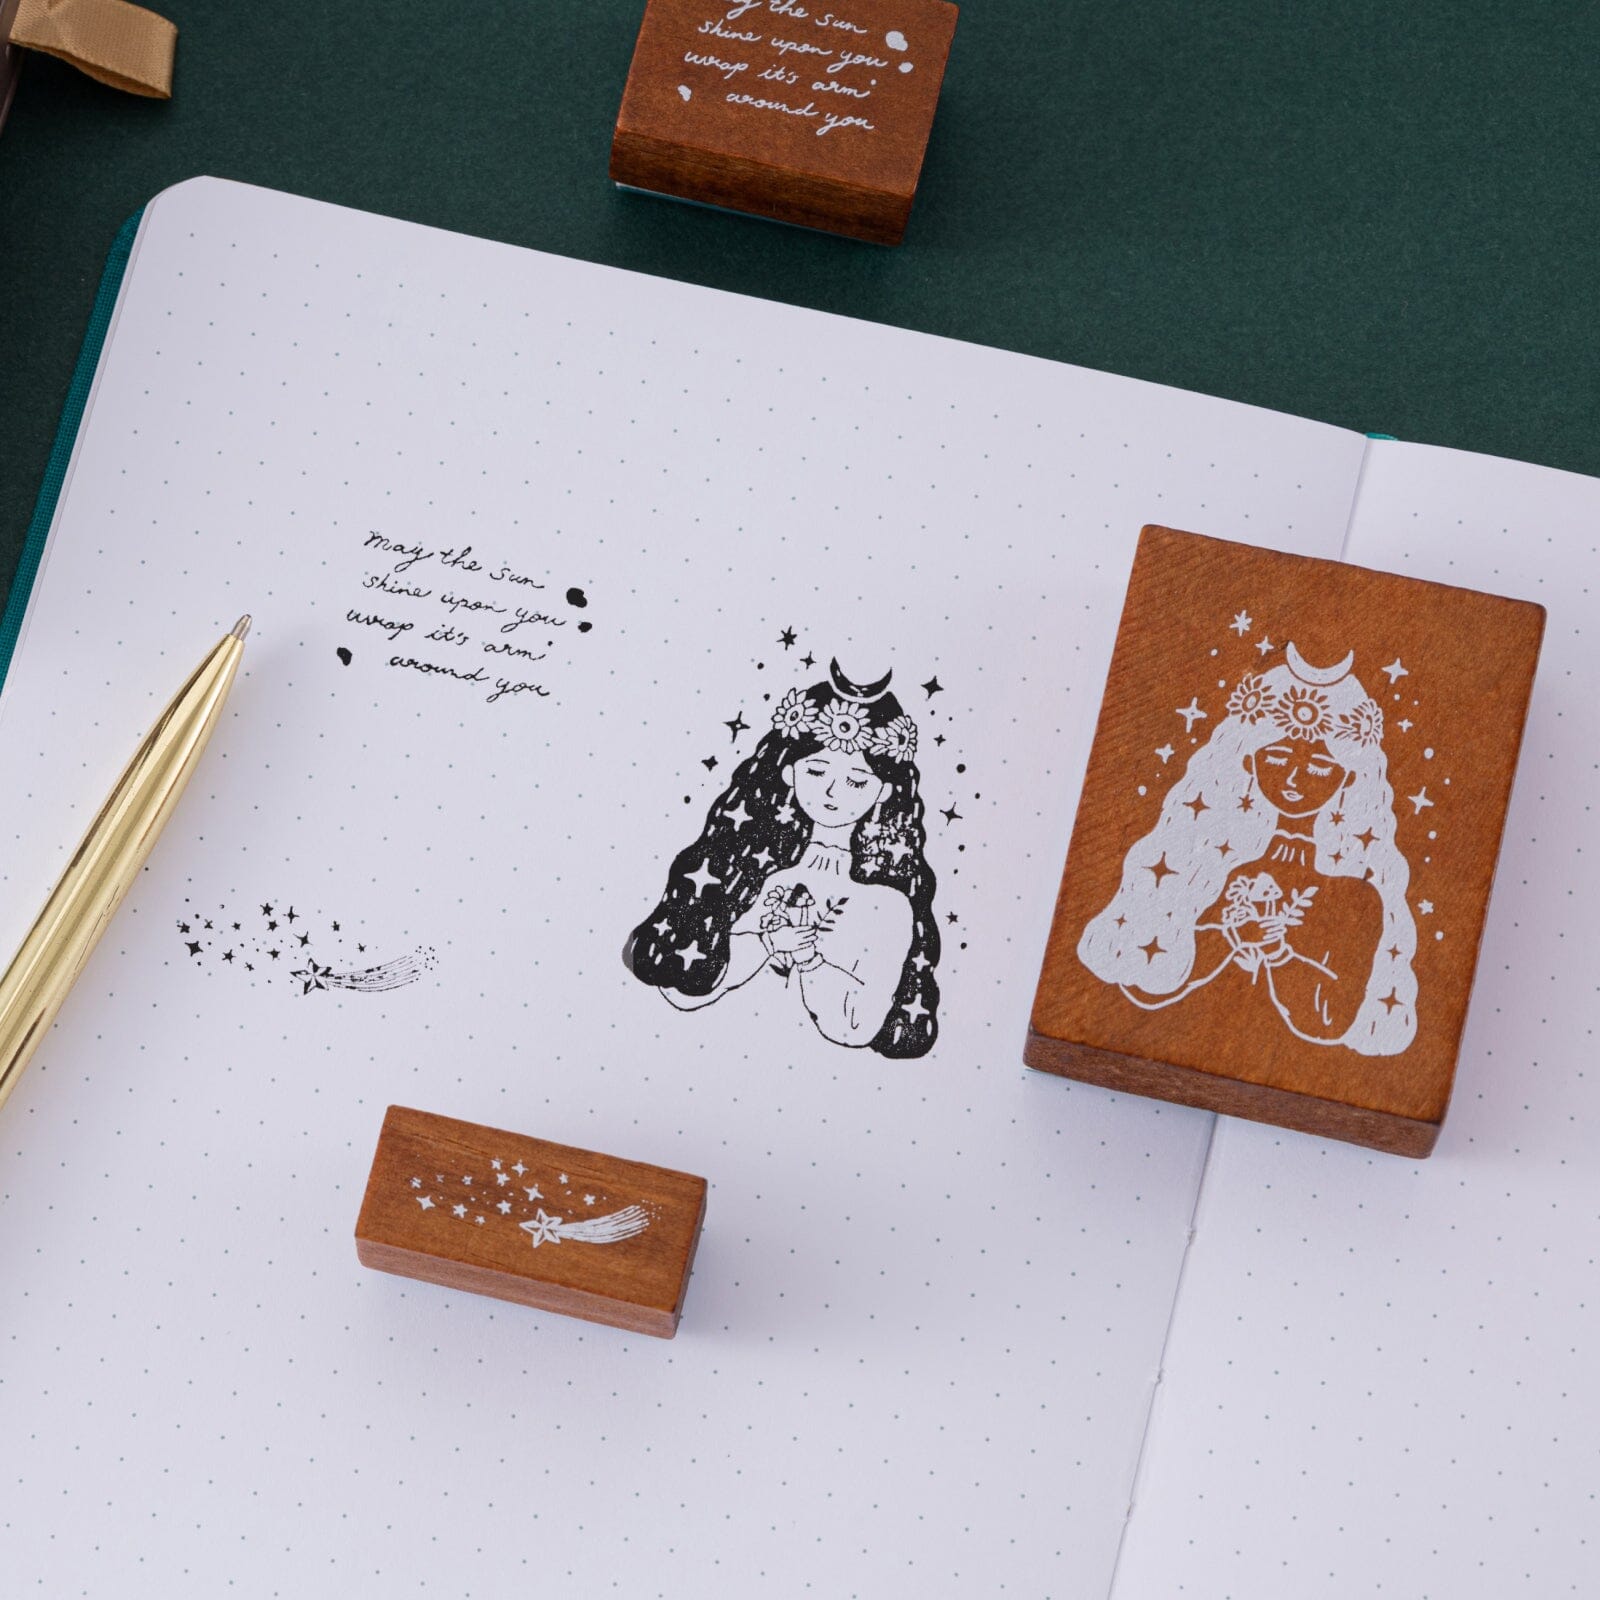 Tsuki ‘Moonlit Spells’ Bullet Journal Stamp Set ☾